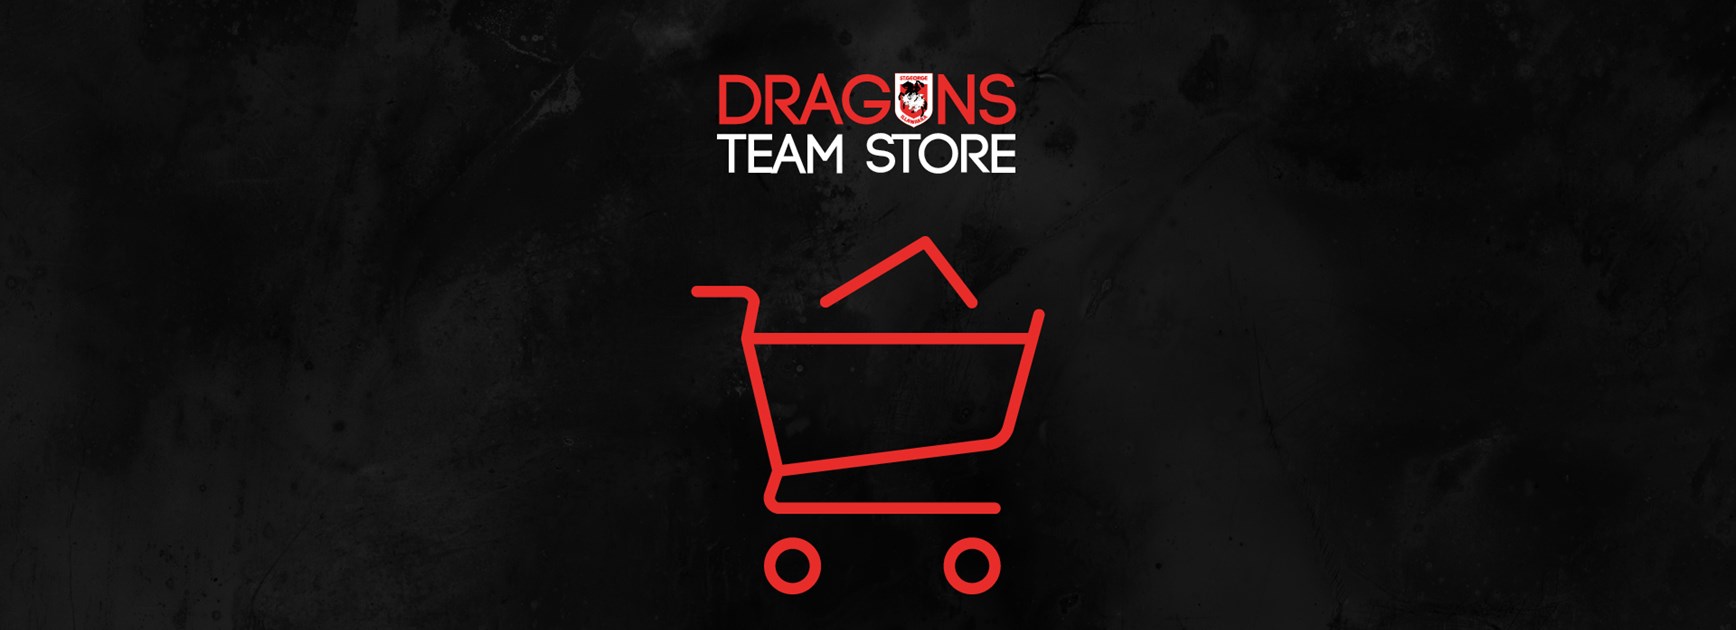 Dragons Team Store end-of-season sale